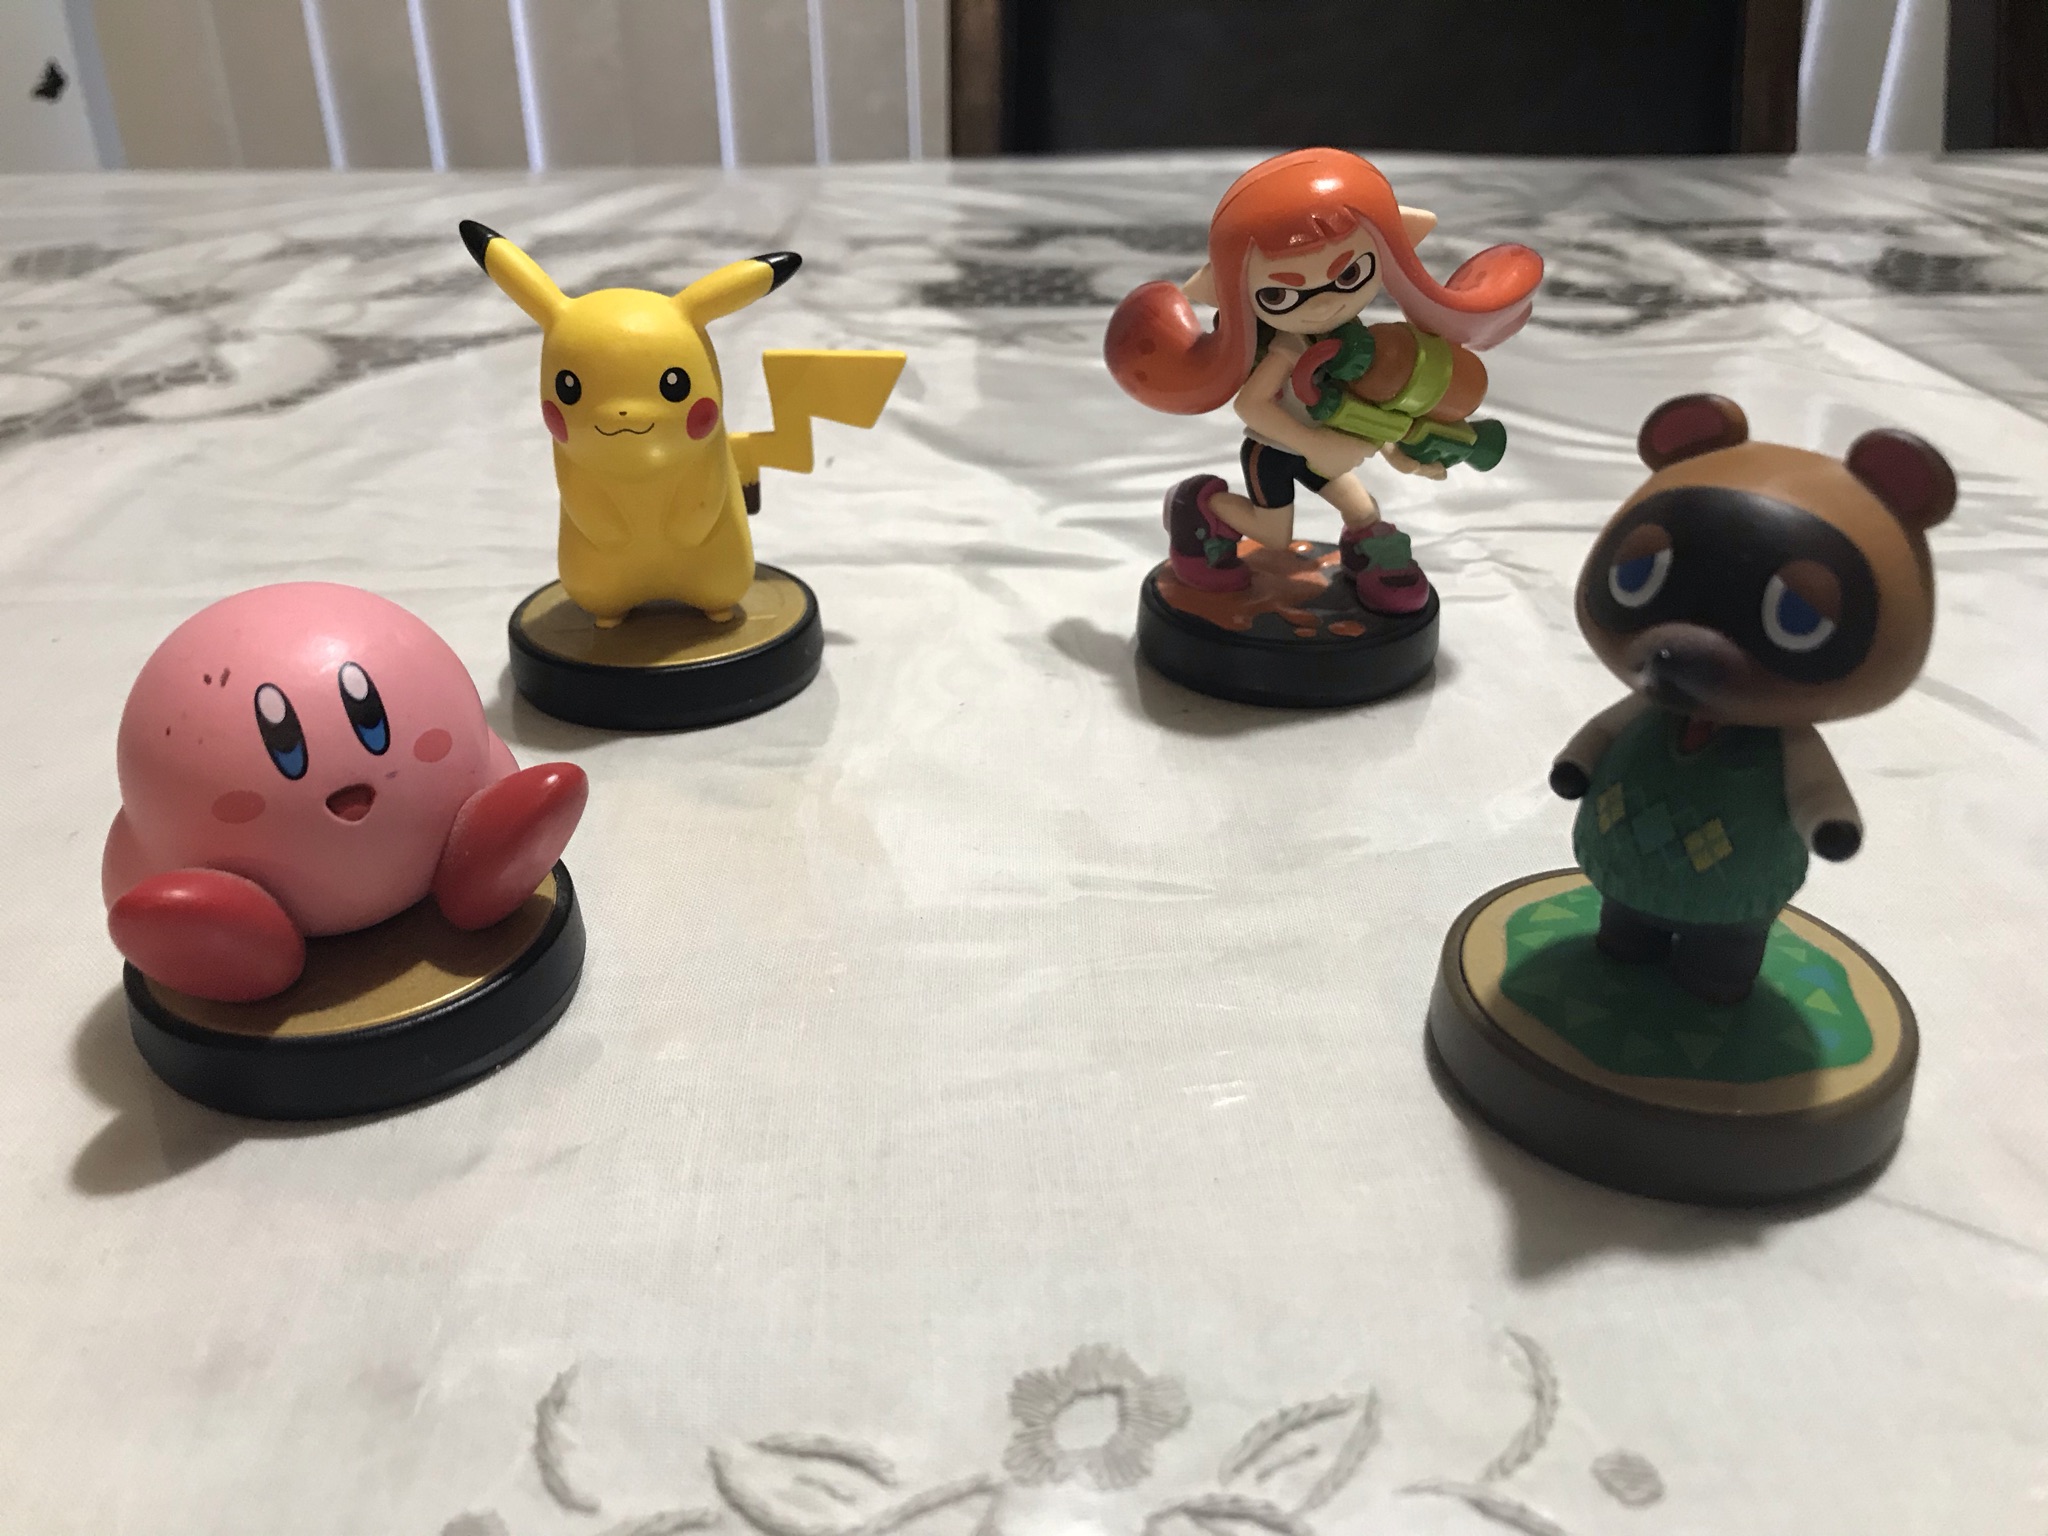 Kirby (Smash), Pikachu (Smash), Inkling (Girl, Splatoon 1), Tom Nook (New Leaf)